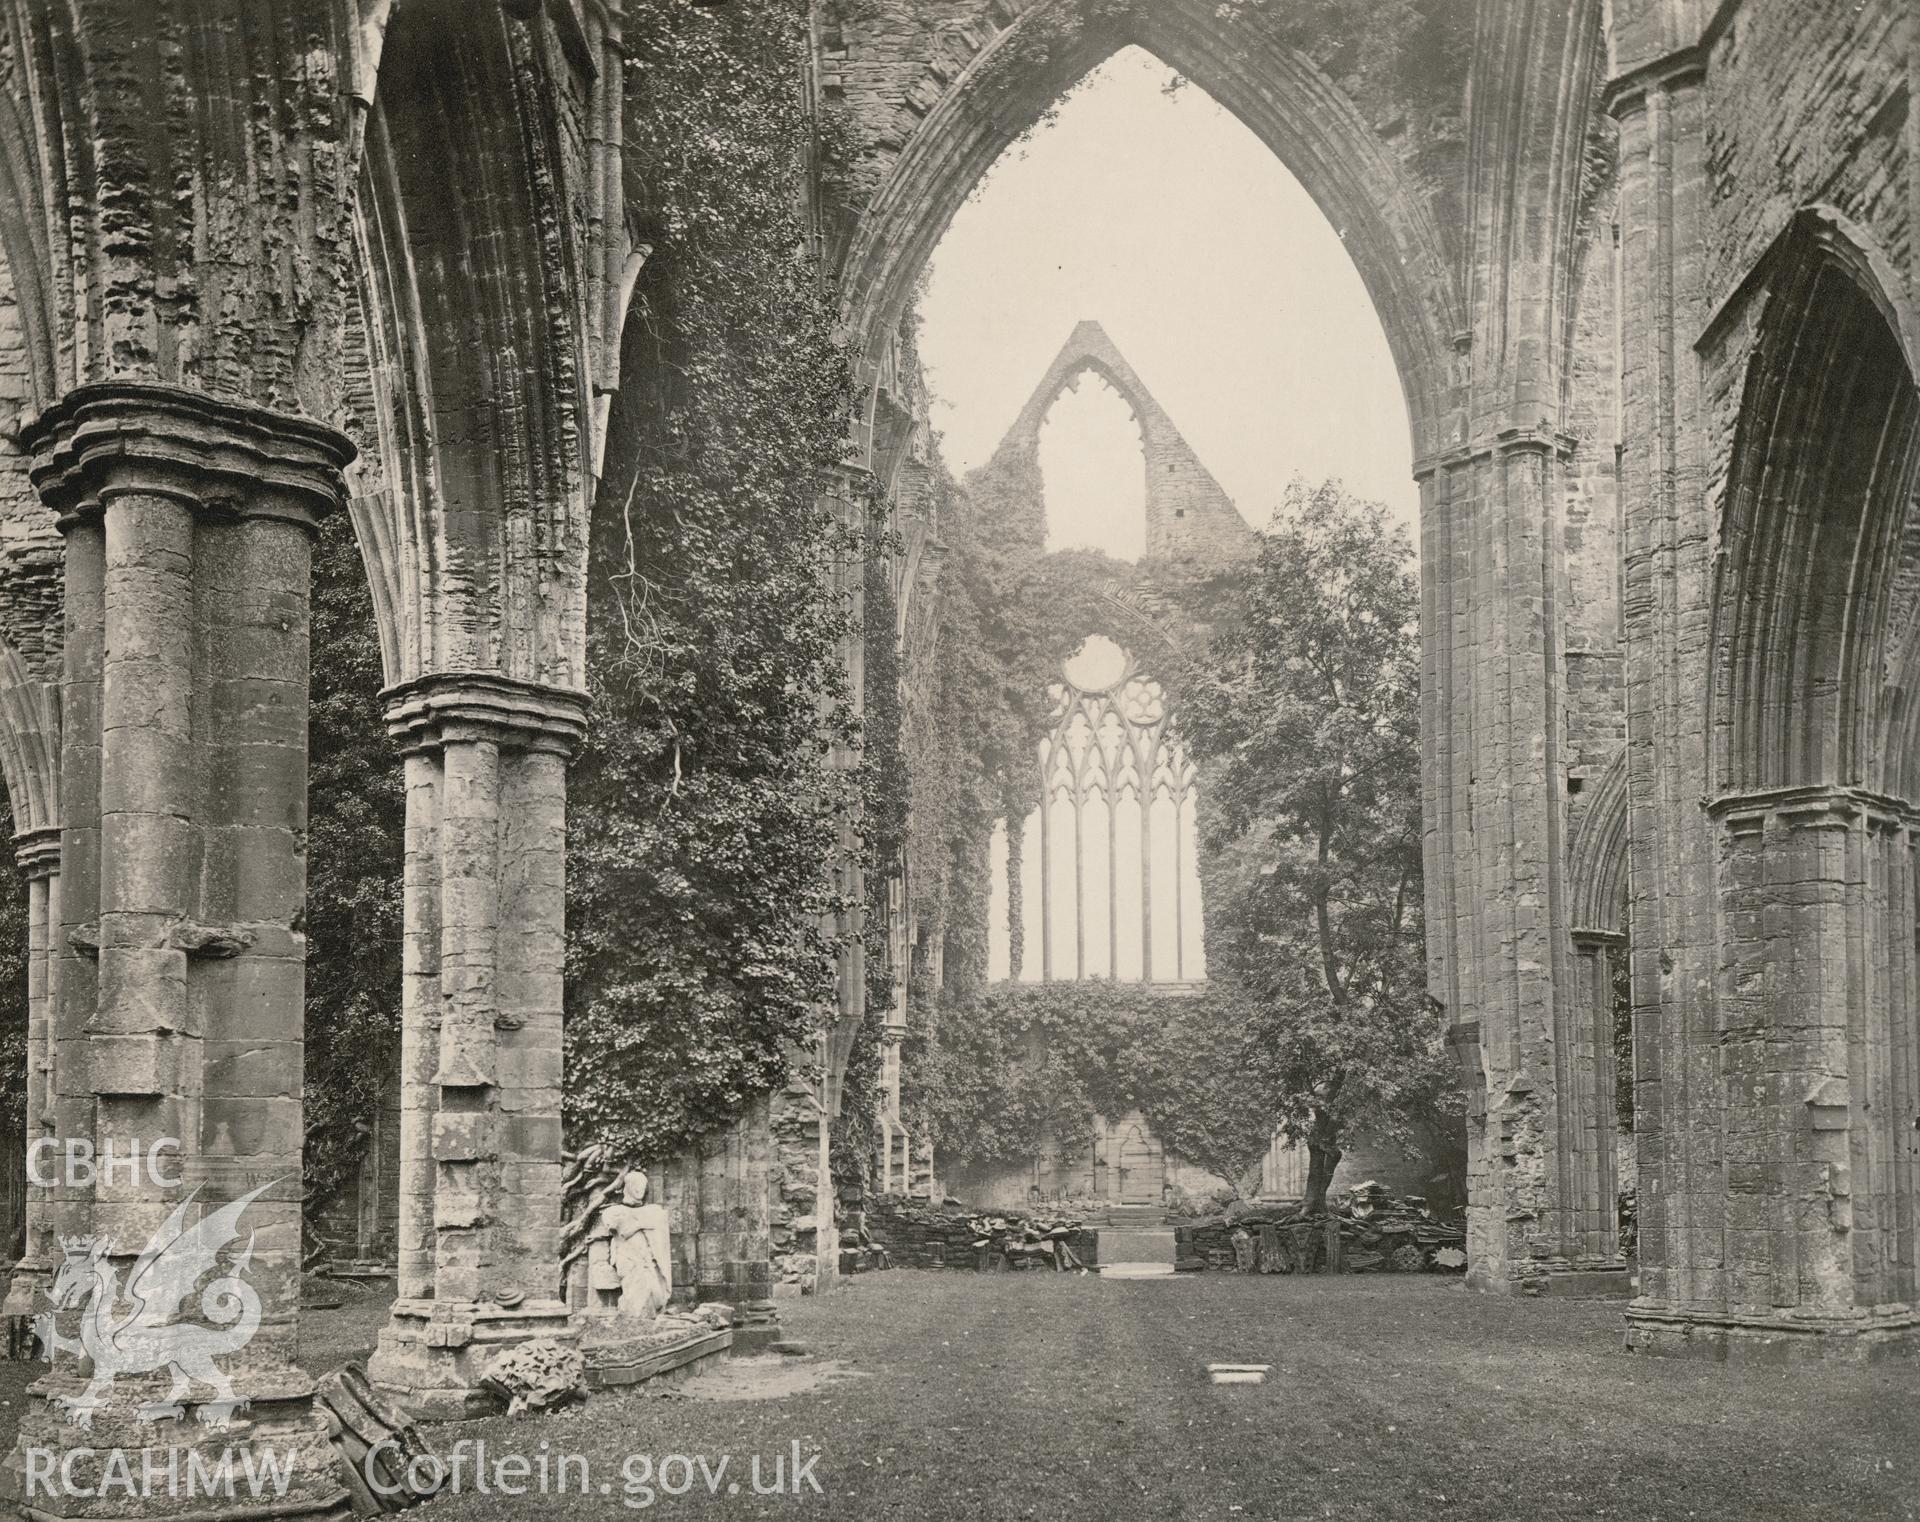 Digital copy of a circa 1870 albumen print showing an interior view of Tintern Abbey.